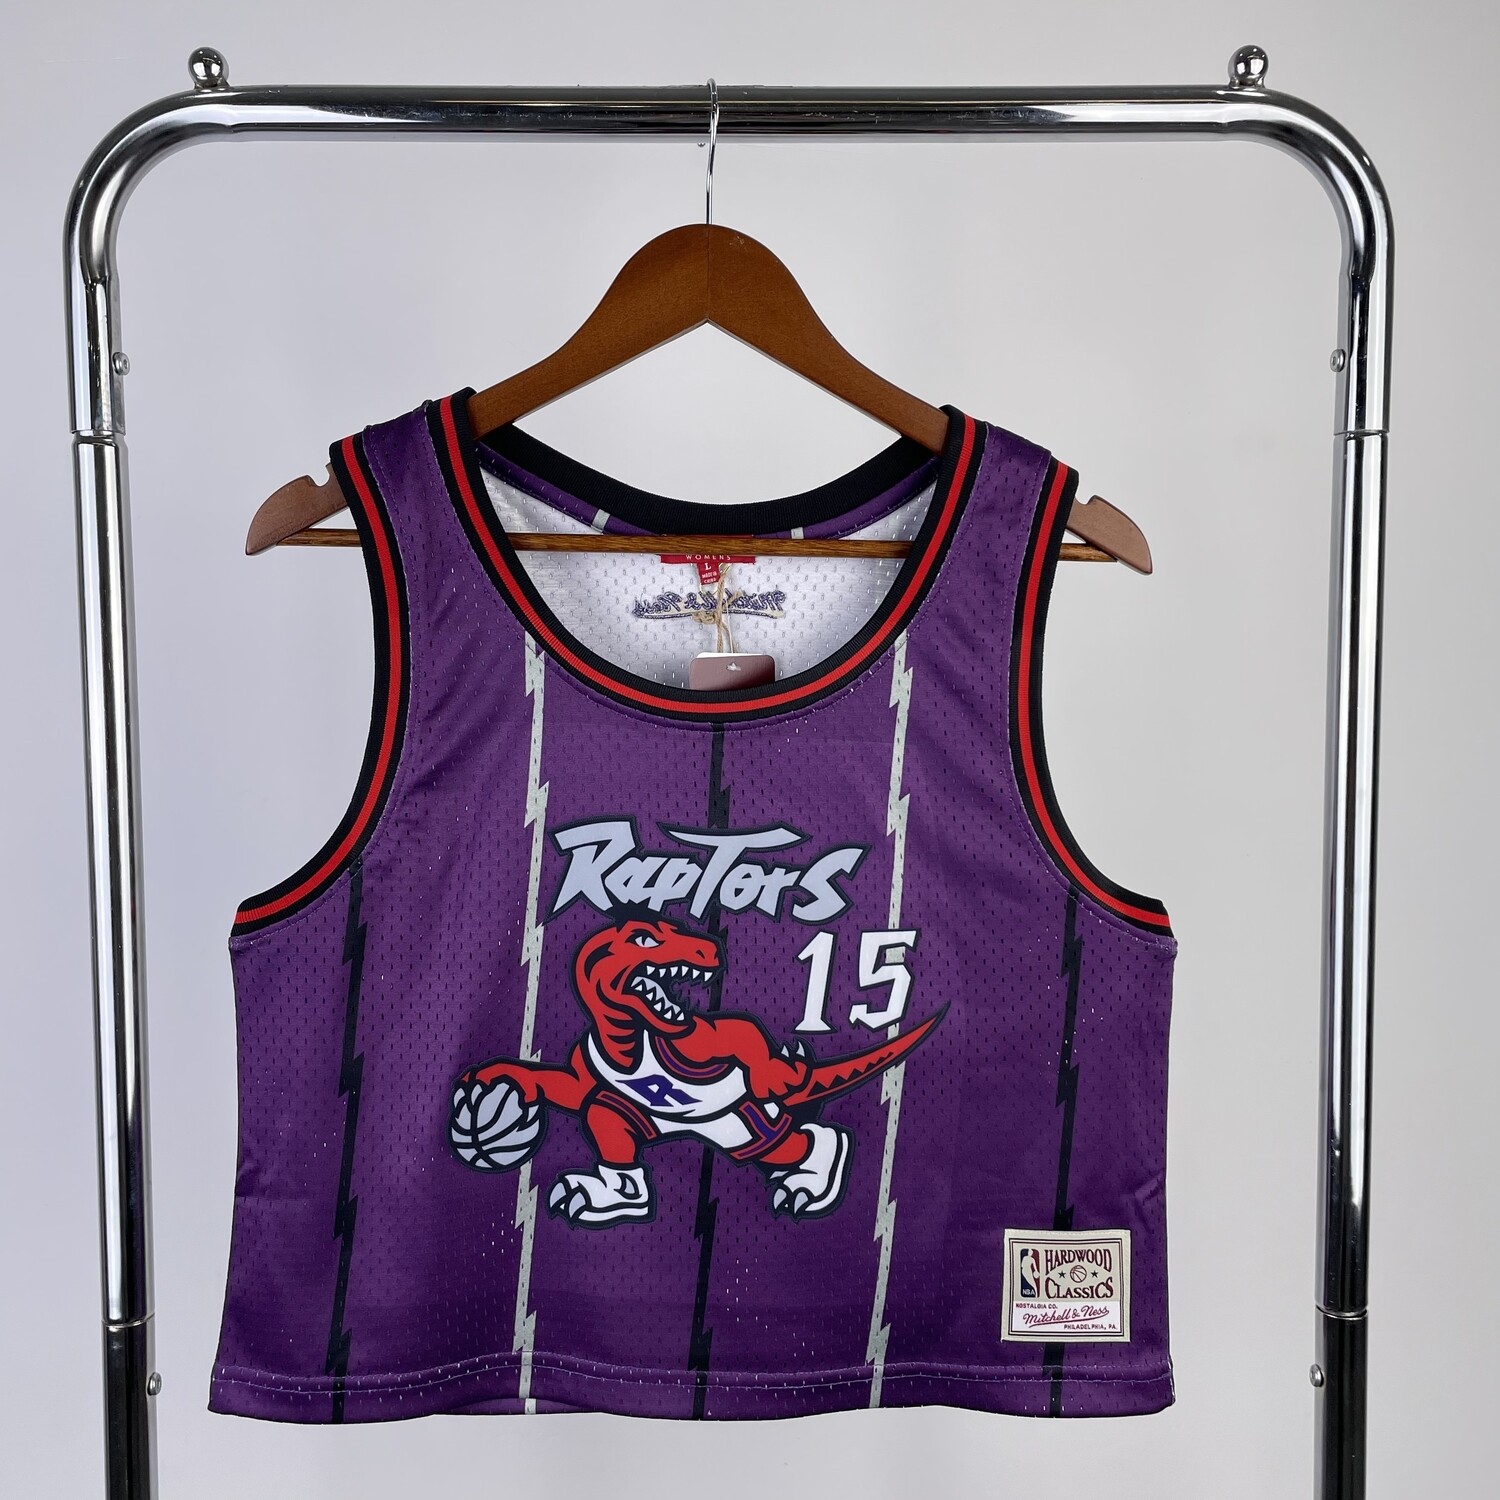 Camisa de Basquete Toronto Raptors Cropped para Mulheres Hardwood Classics M&N - 15 Vince Carter